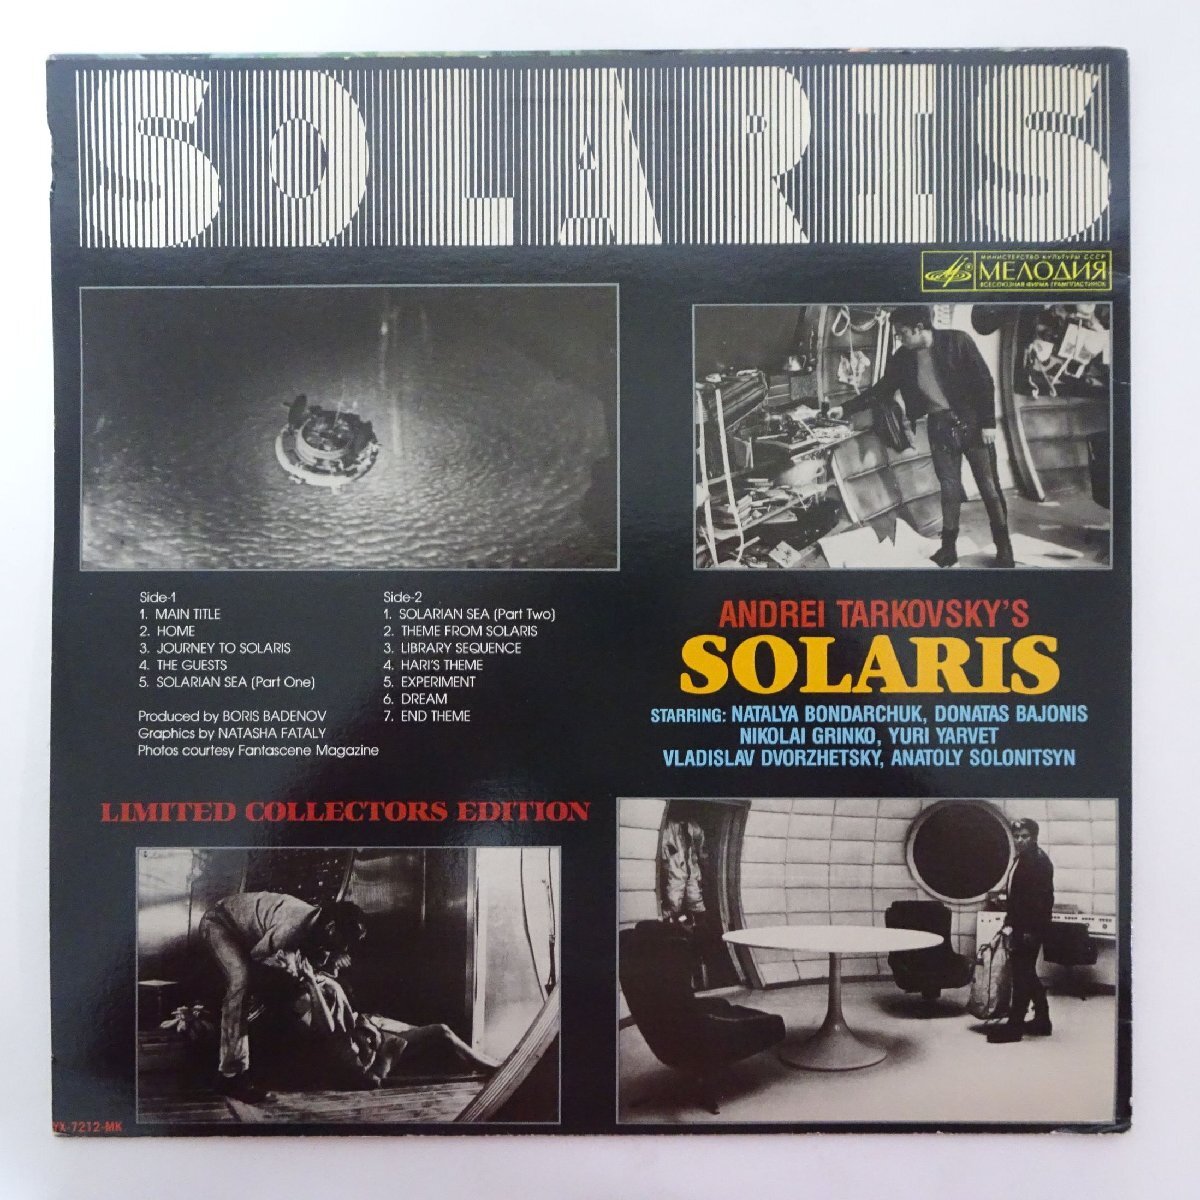 14030968;[US запись /Unofficioal/ ограничение Press ]Eduard Artemiev / Electronic Music Experiment Studio Ensemble / Solaris планета sola белка 